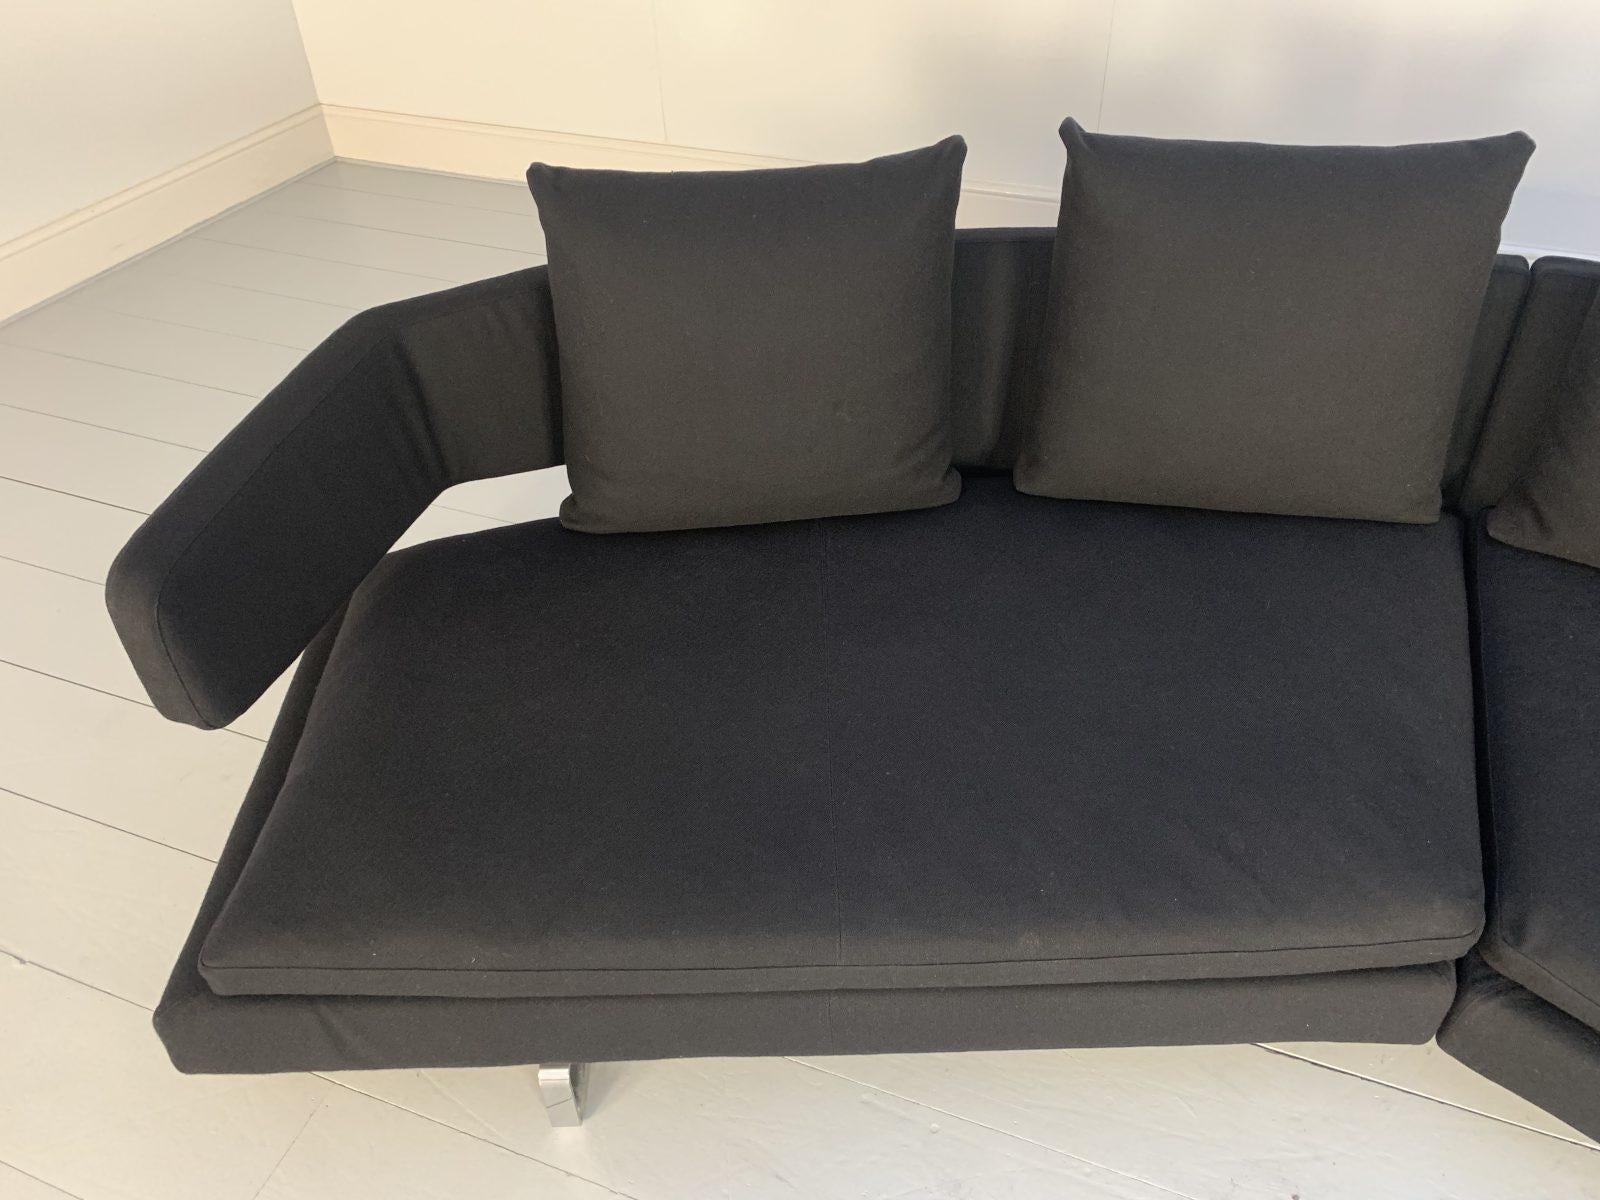 B&B Italia “Arne A320CS” 3-Seat Curved Sofa, in Black Wool For Sale 3